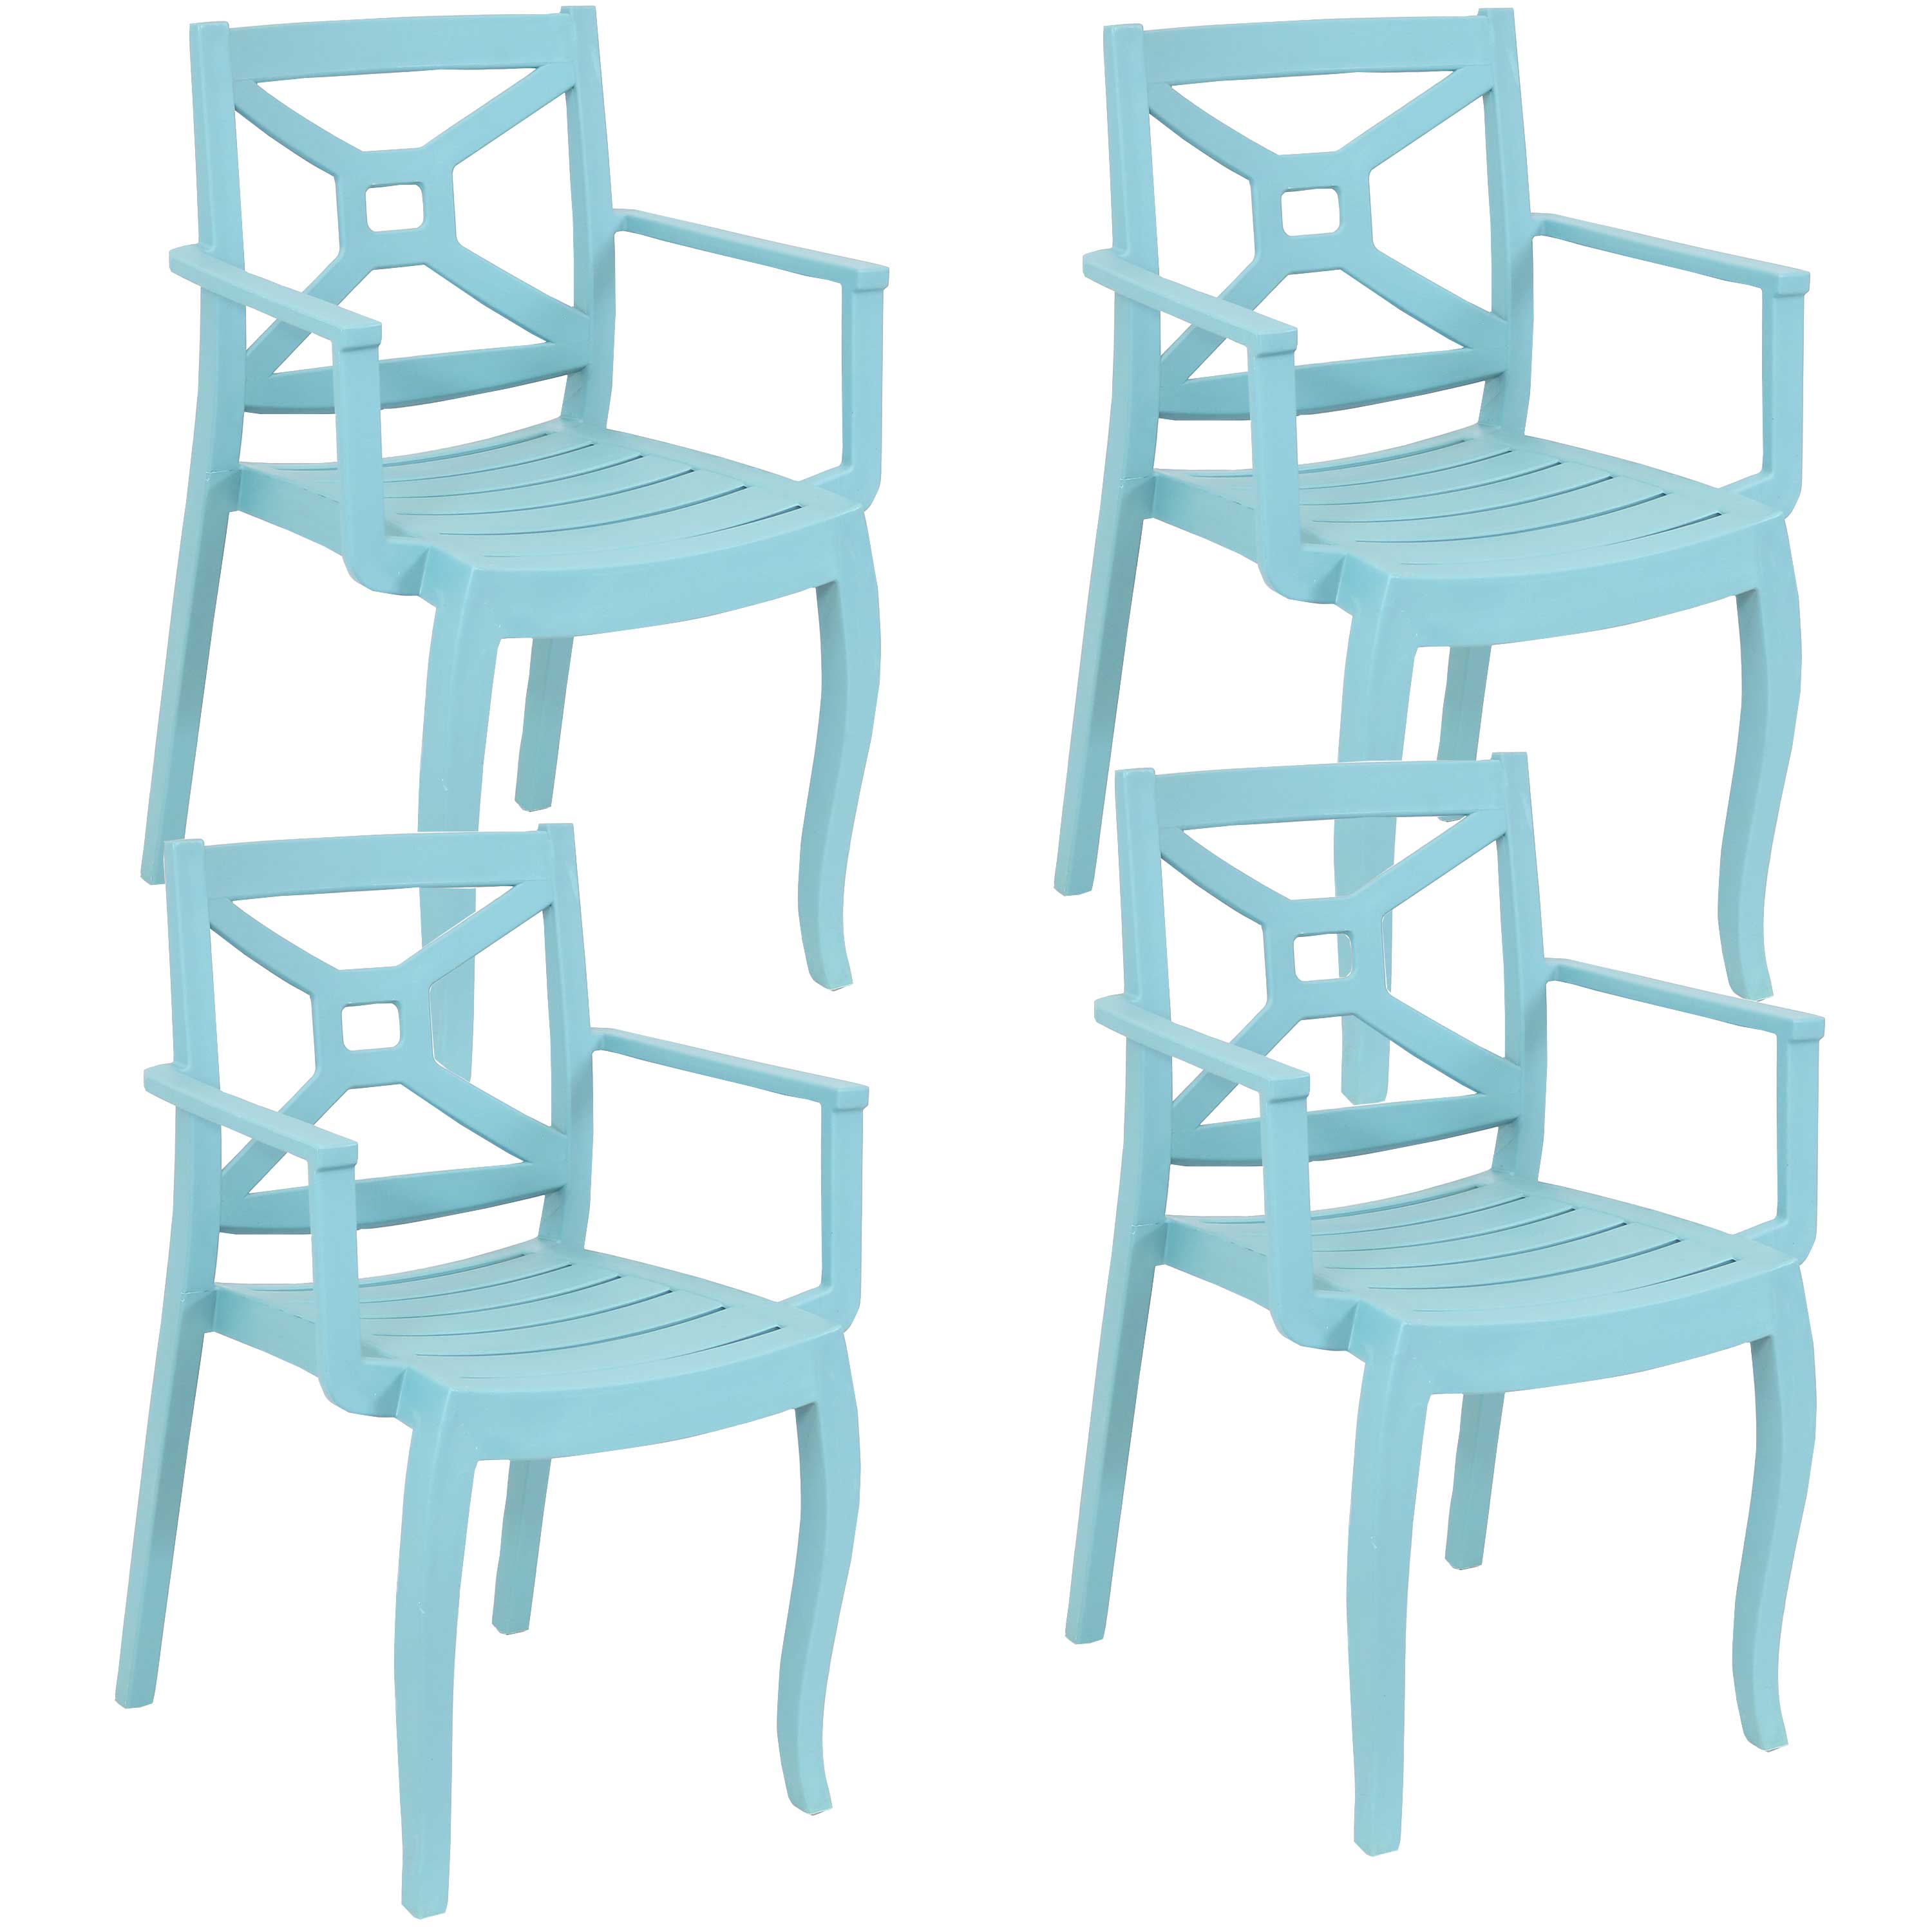 Sunnydaze Tristana Plastic Outdoor Dining Armchair - Spring Blue - Set of 4 - image 1 of 10